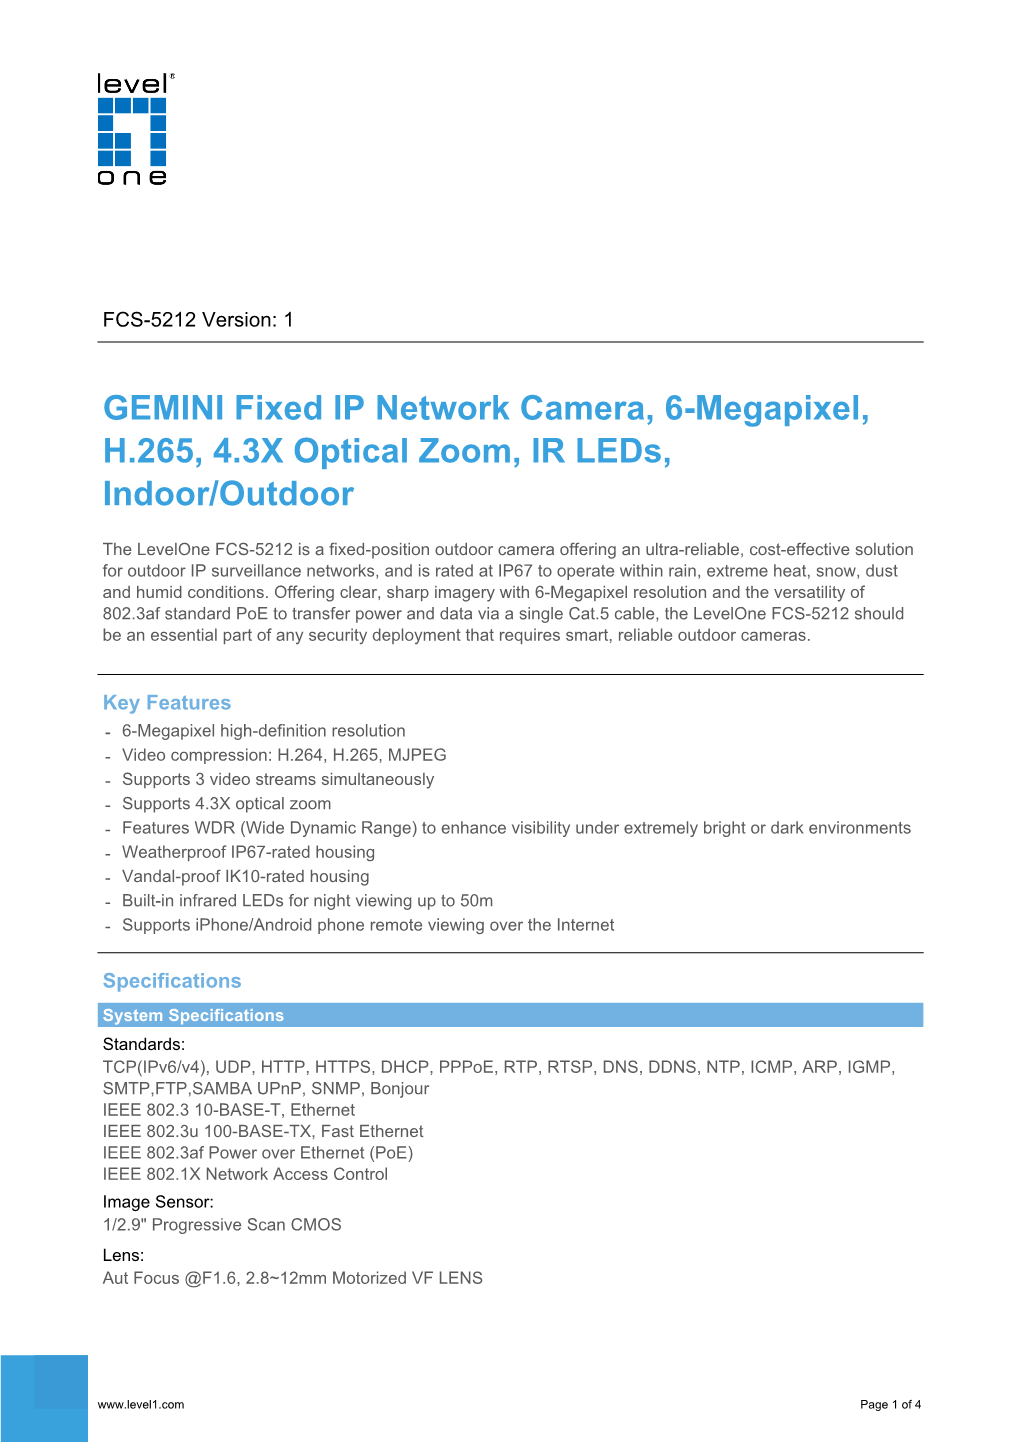 GEMINI Fixed IP Network Camera, 6-Megapixel, H.265, 4.3X Optical Zoom, IR Leds, Indoor/Outdoor